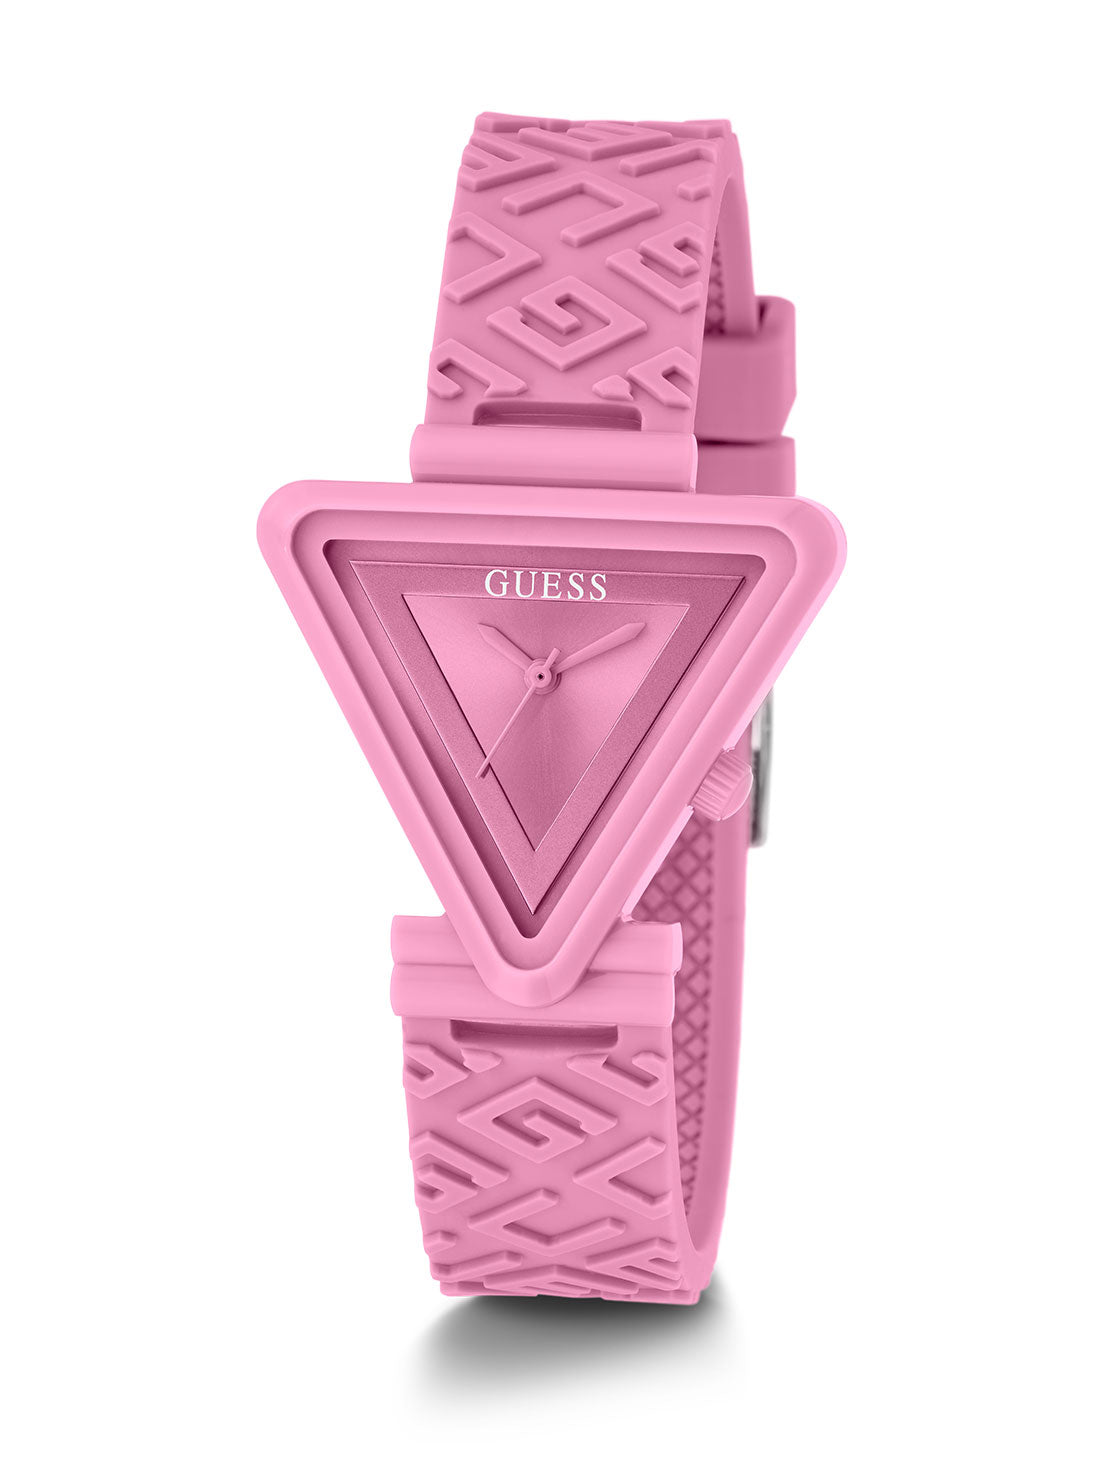 GUESS Women's Pink Fame Logo Silicone Watch GW0543L2 Full View